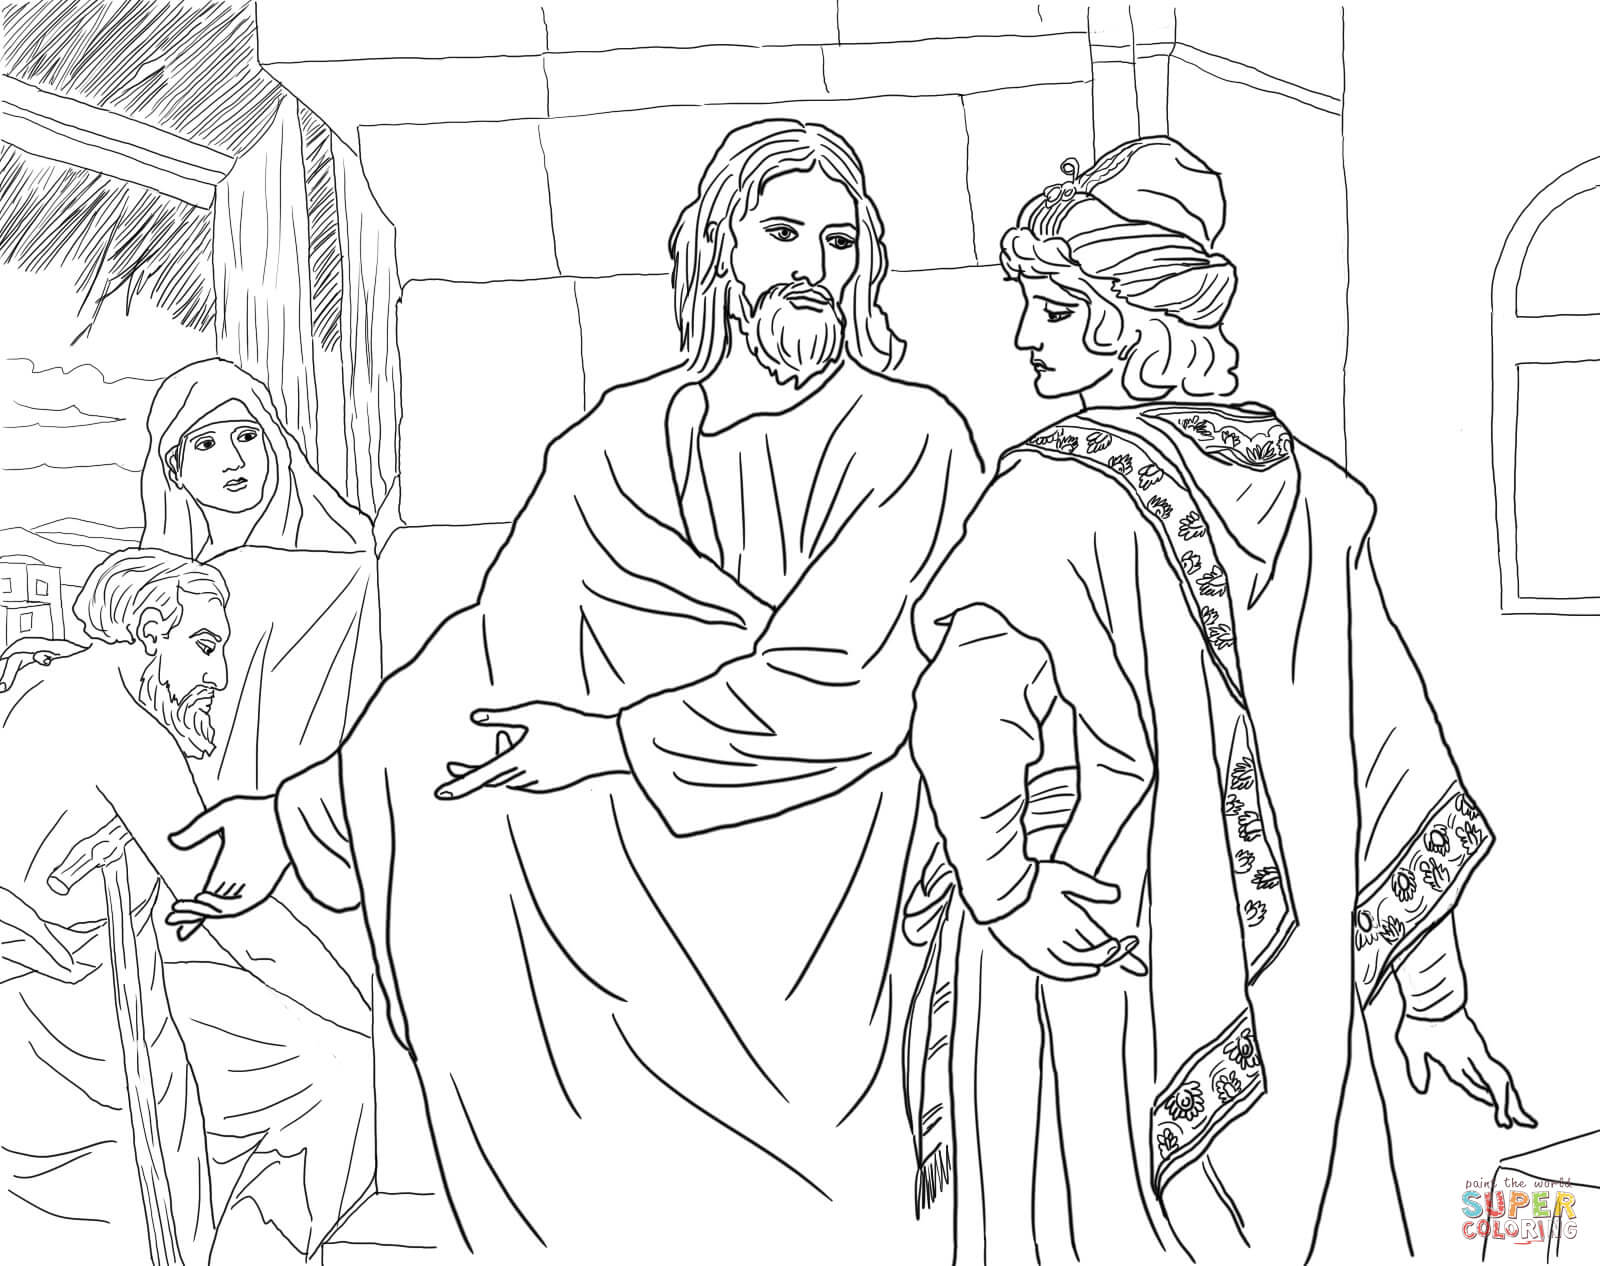 Jesus Raises Lazarus Coloring Page Coloring Home